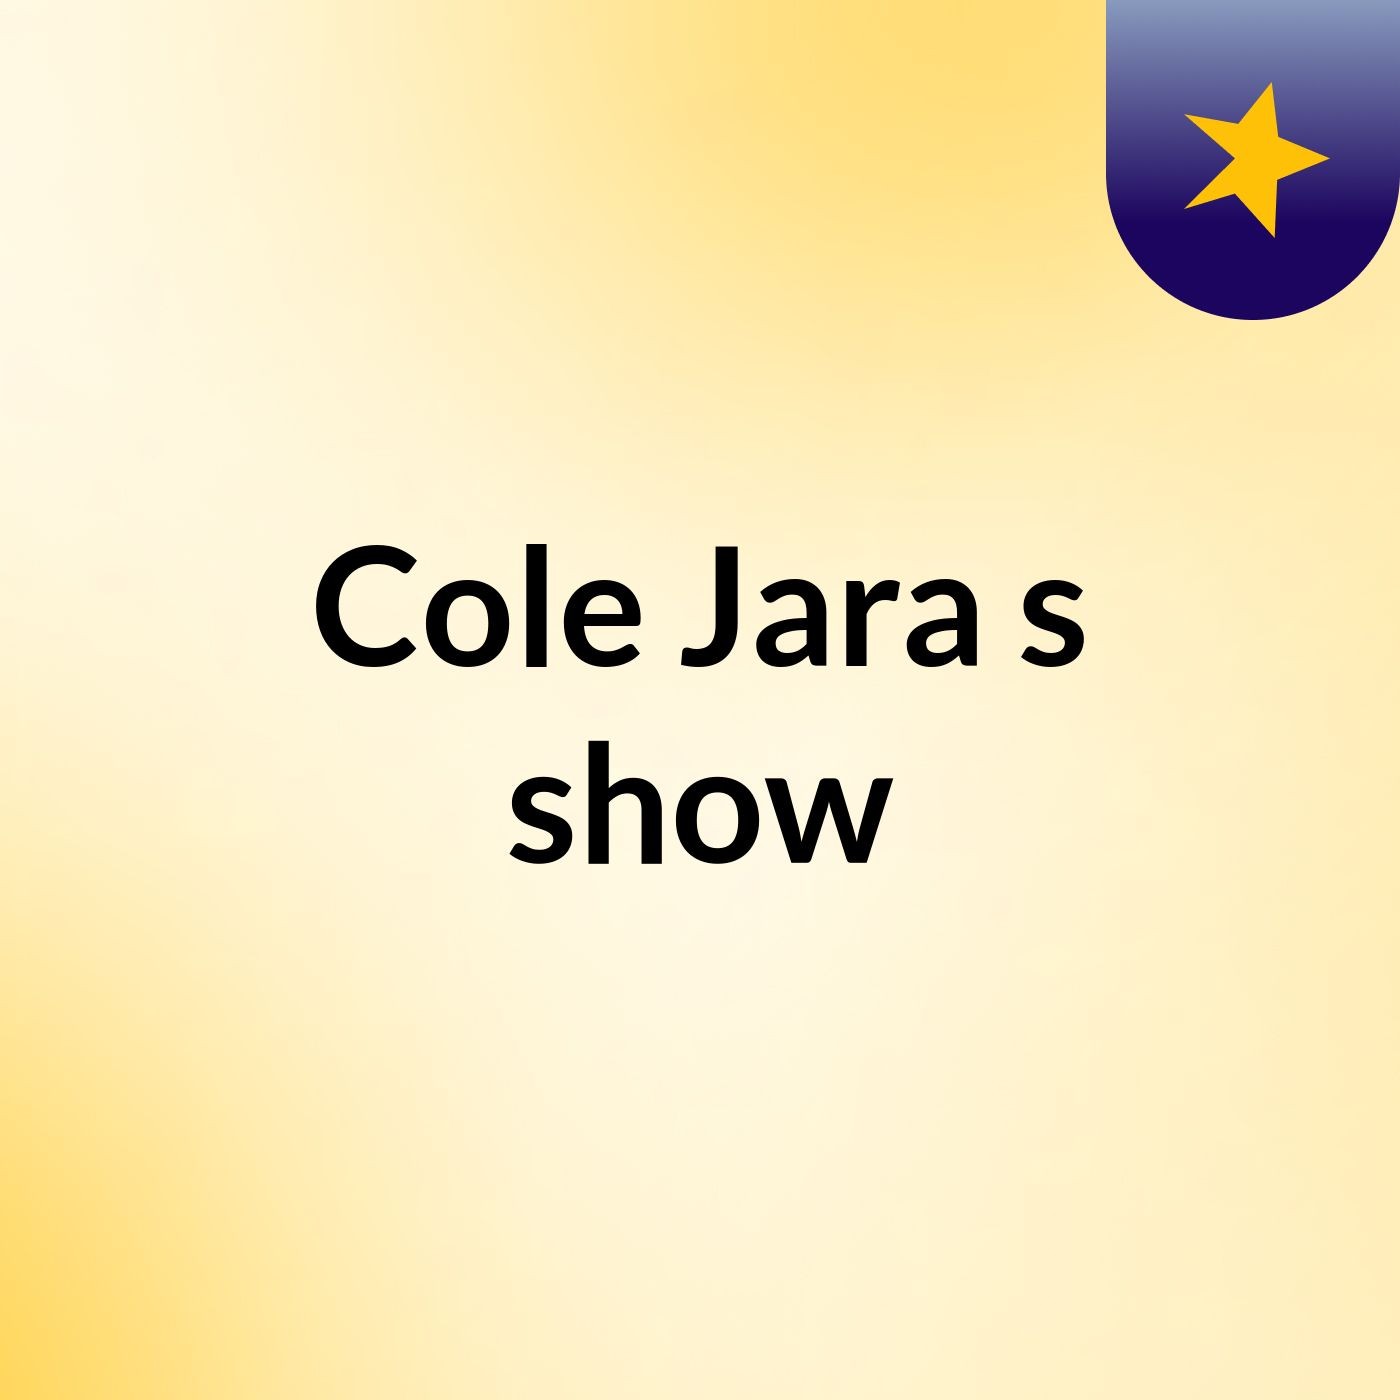 Cole Jara's show